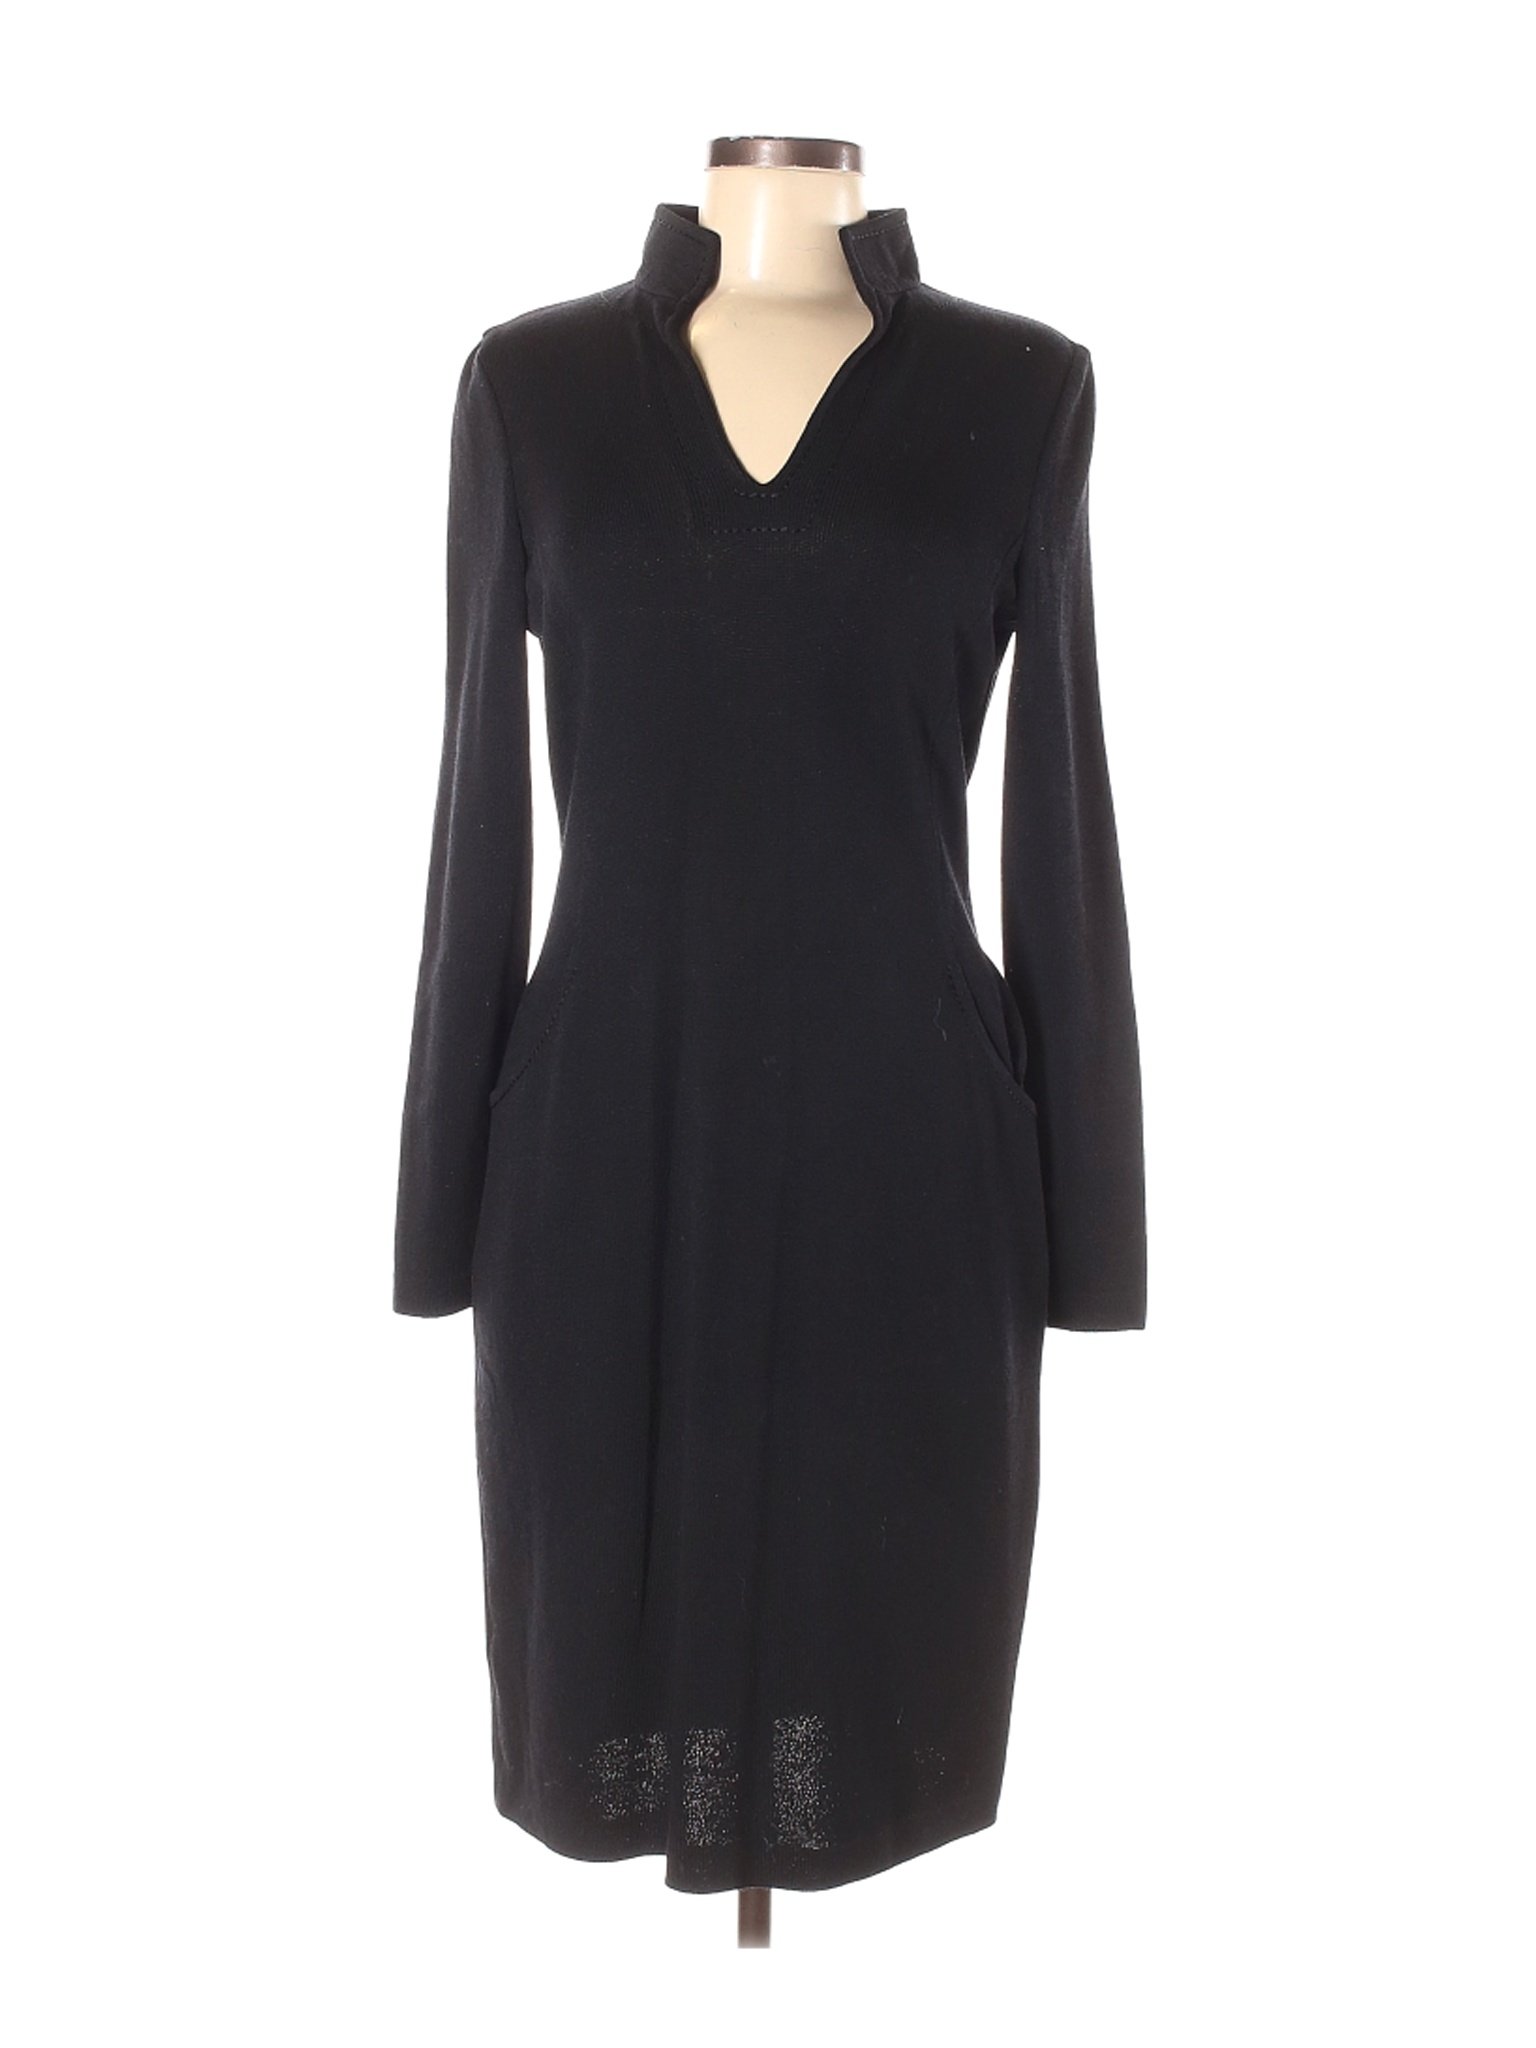 St. John Caviar Women Black Casual Dress 6 | eBay